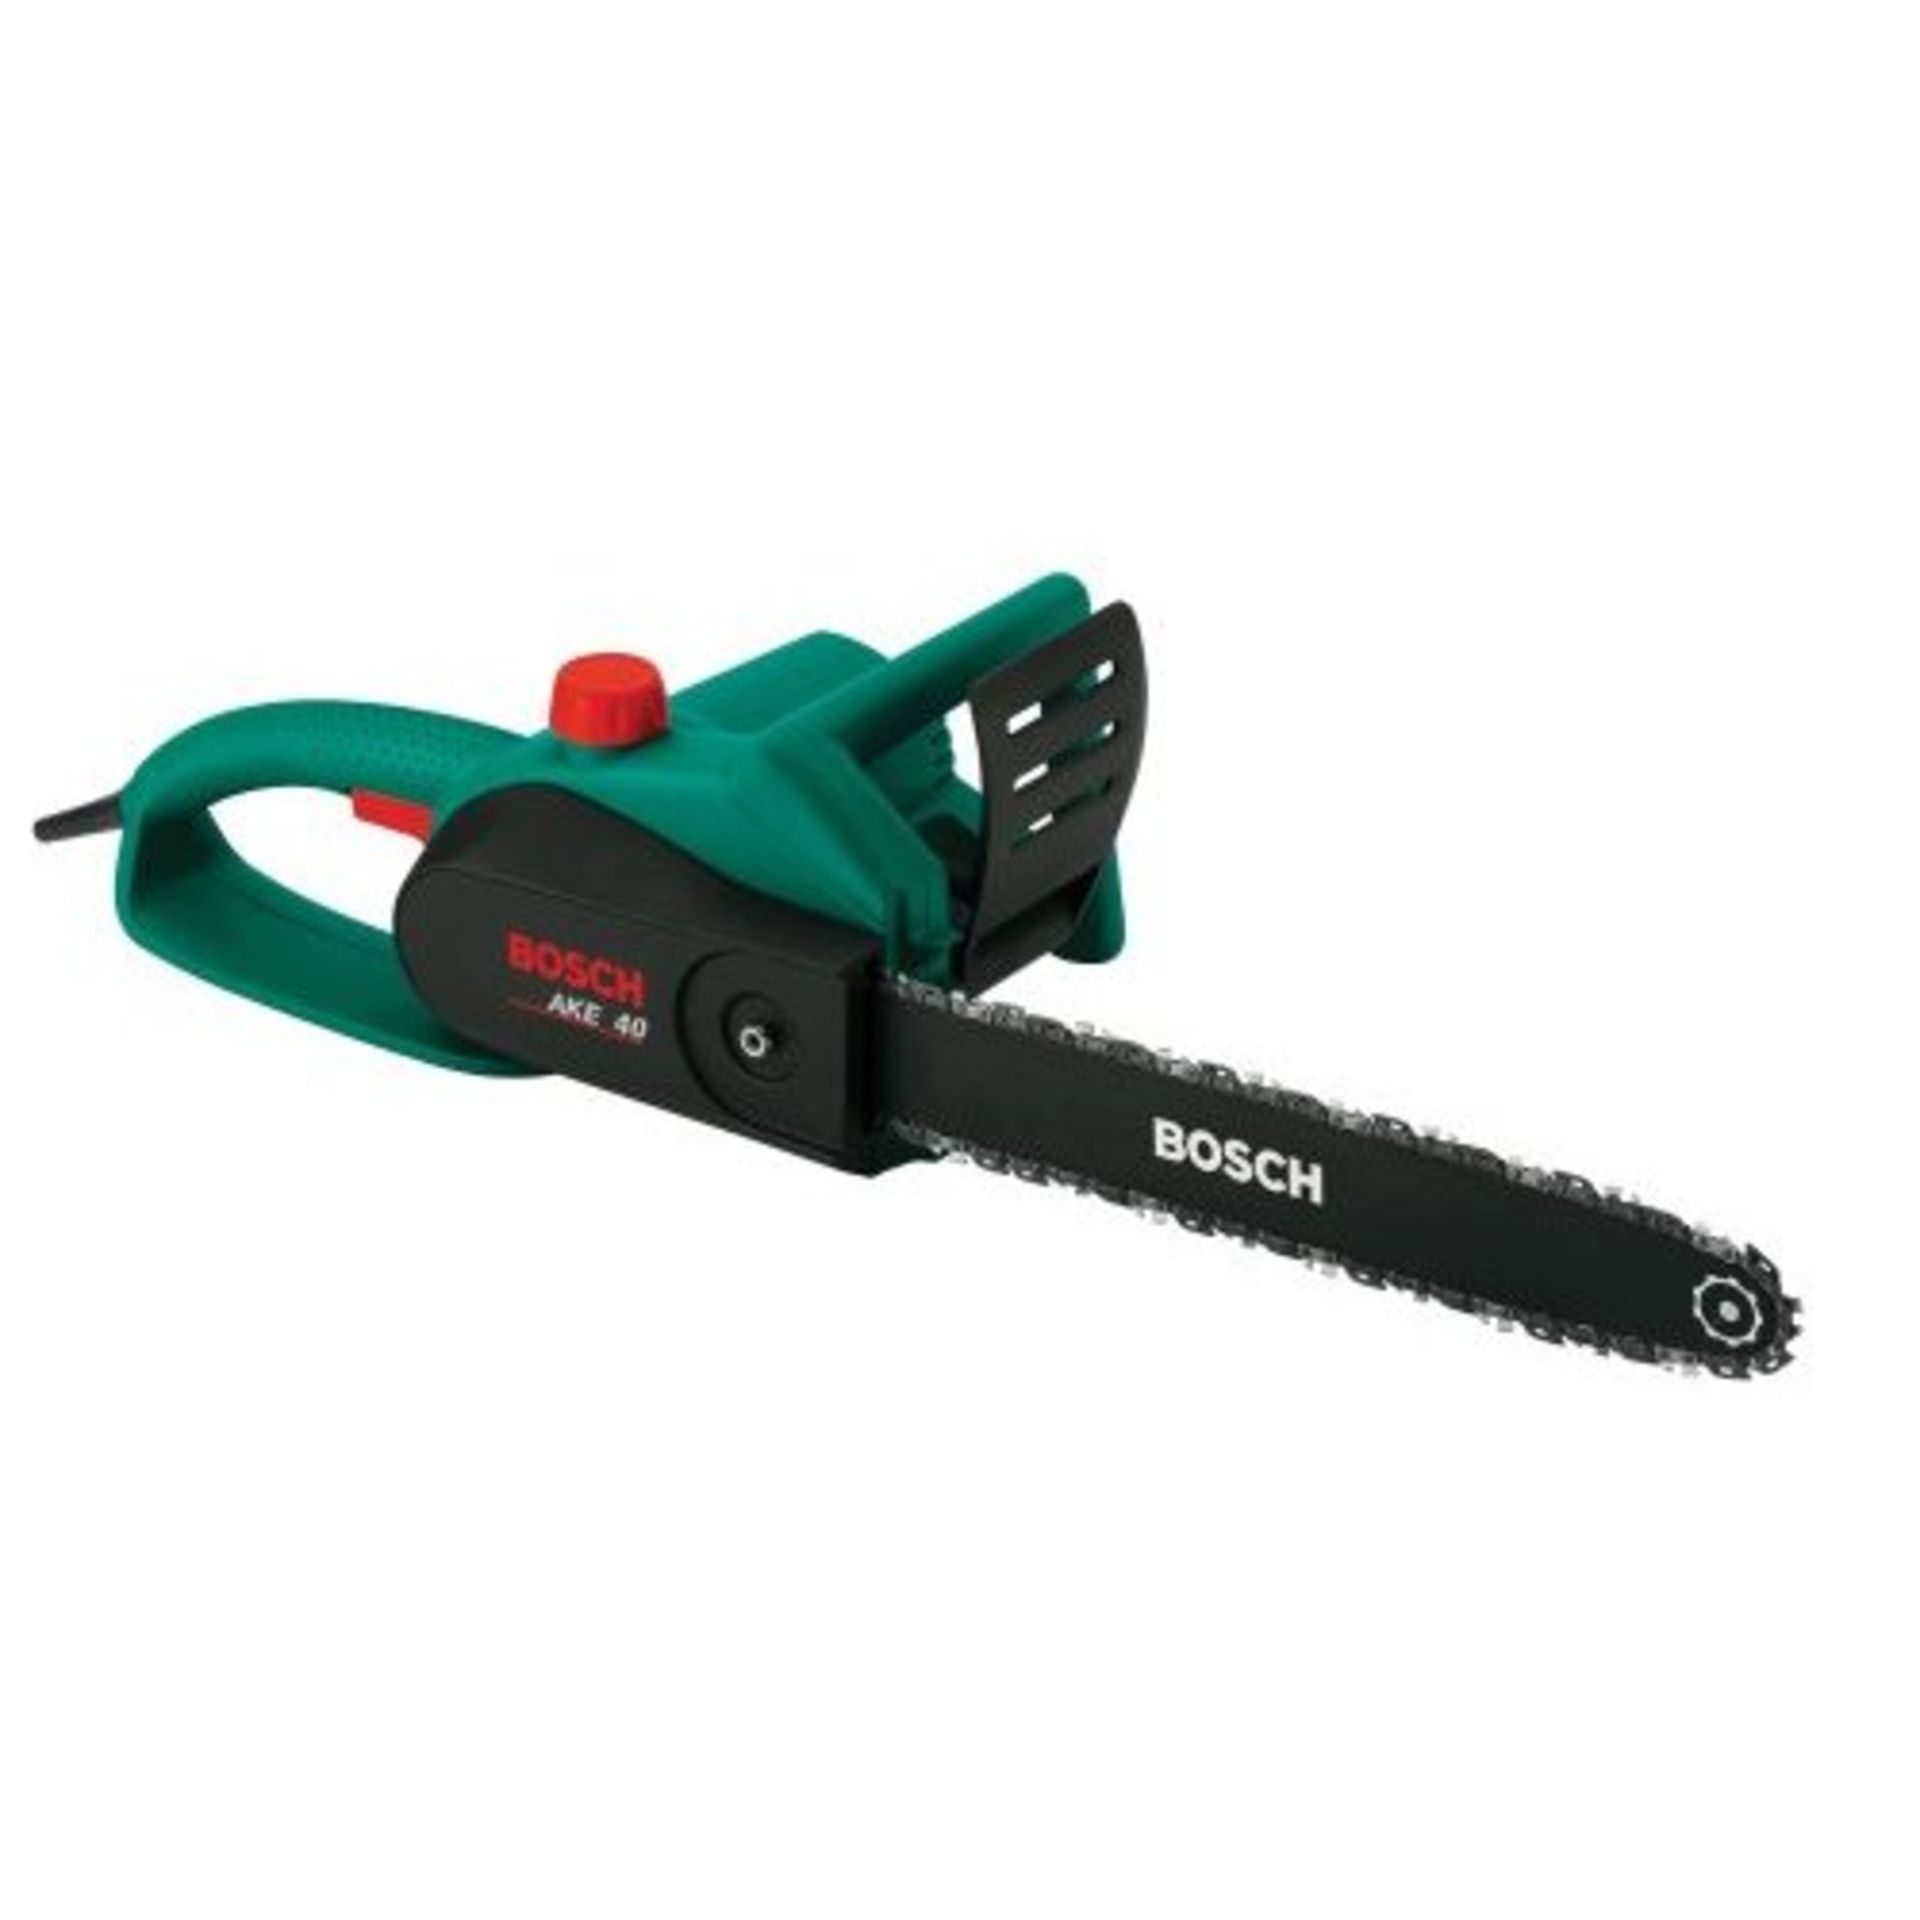 Bosch AKE 40 Electric Chainsaw, 40 cm RRP £99.99